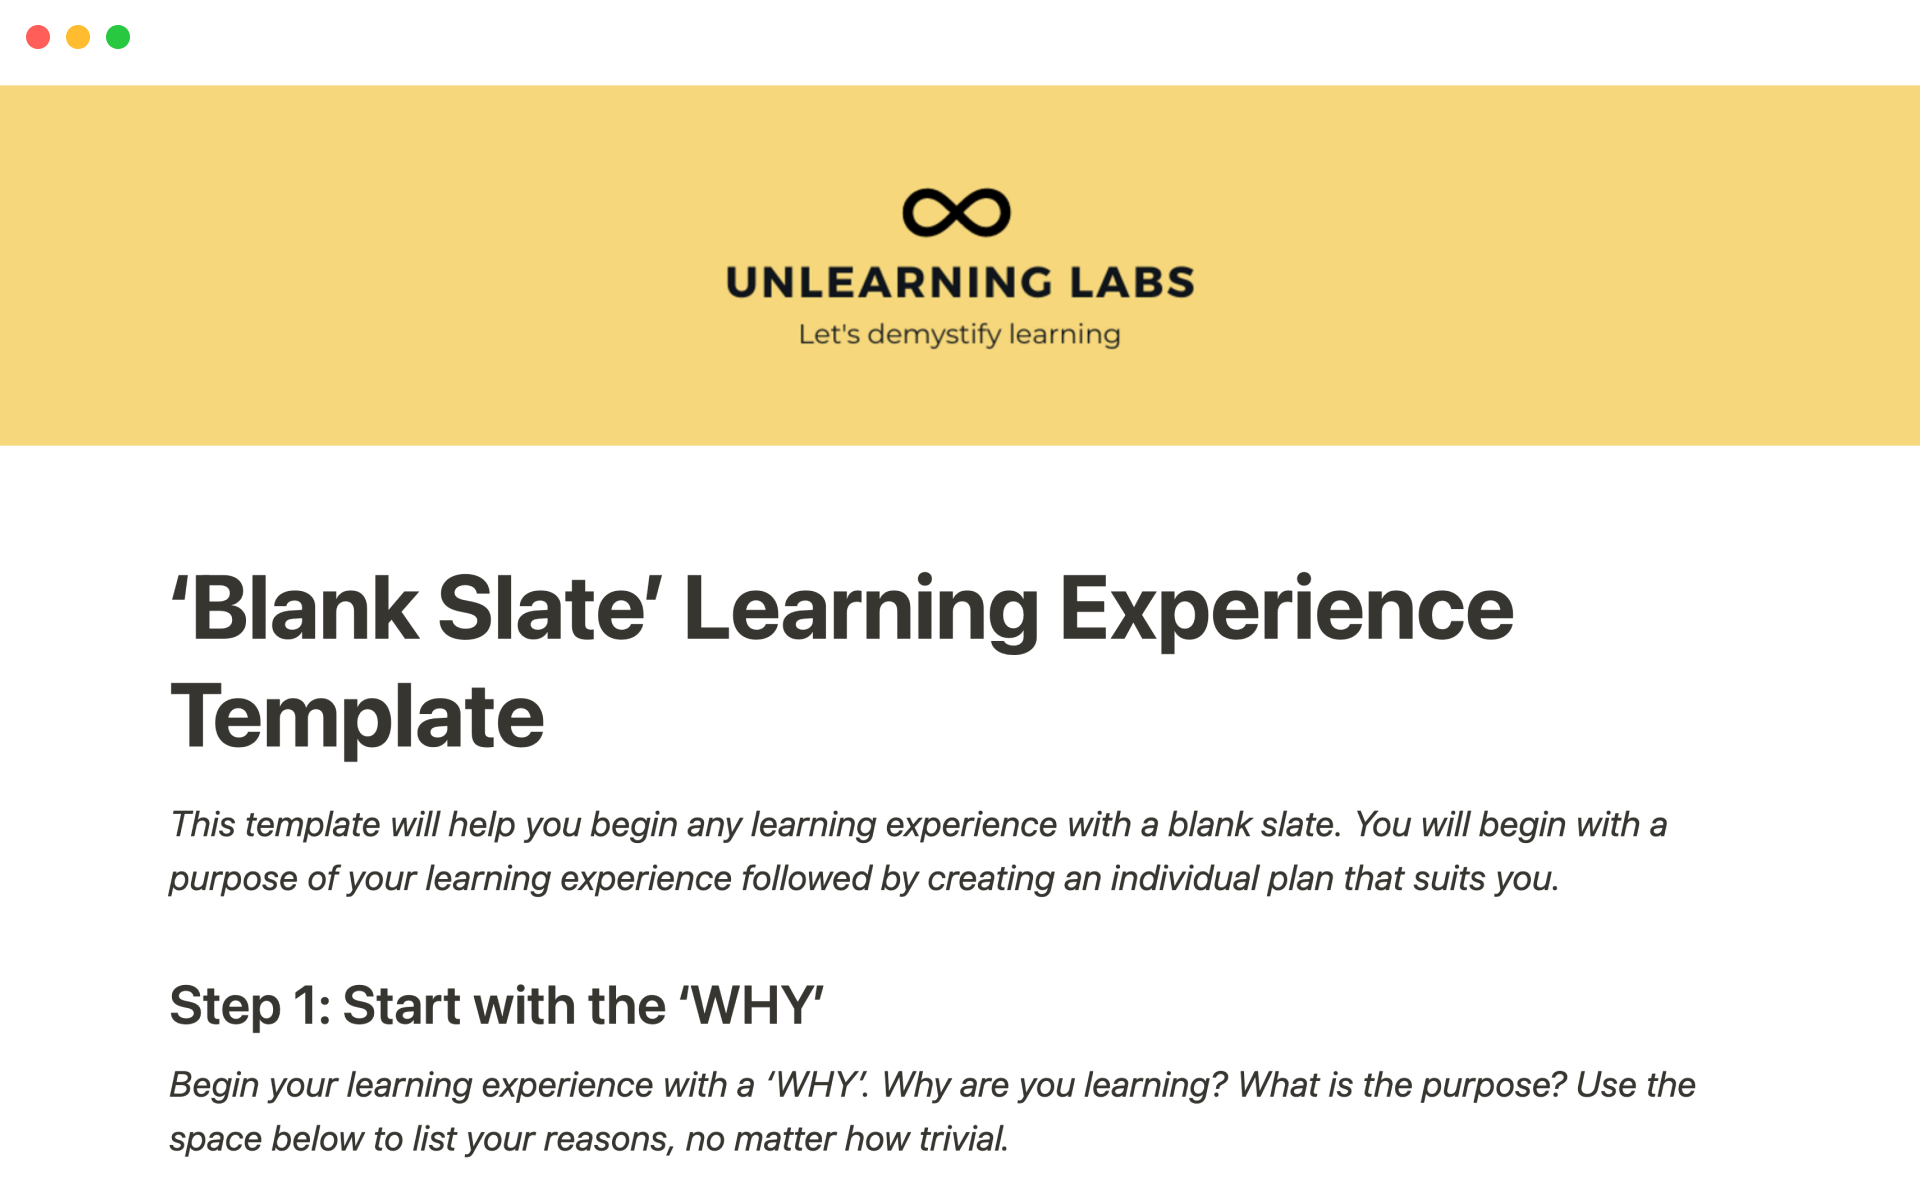 Vista previa de plantilla para 'Blank Slate' Learning Experience Template